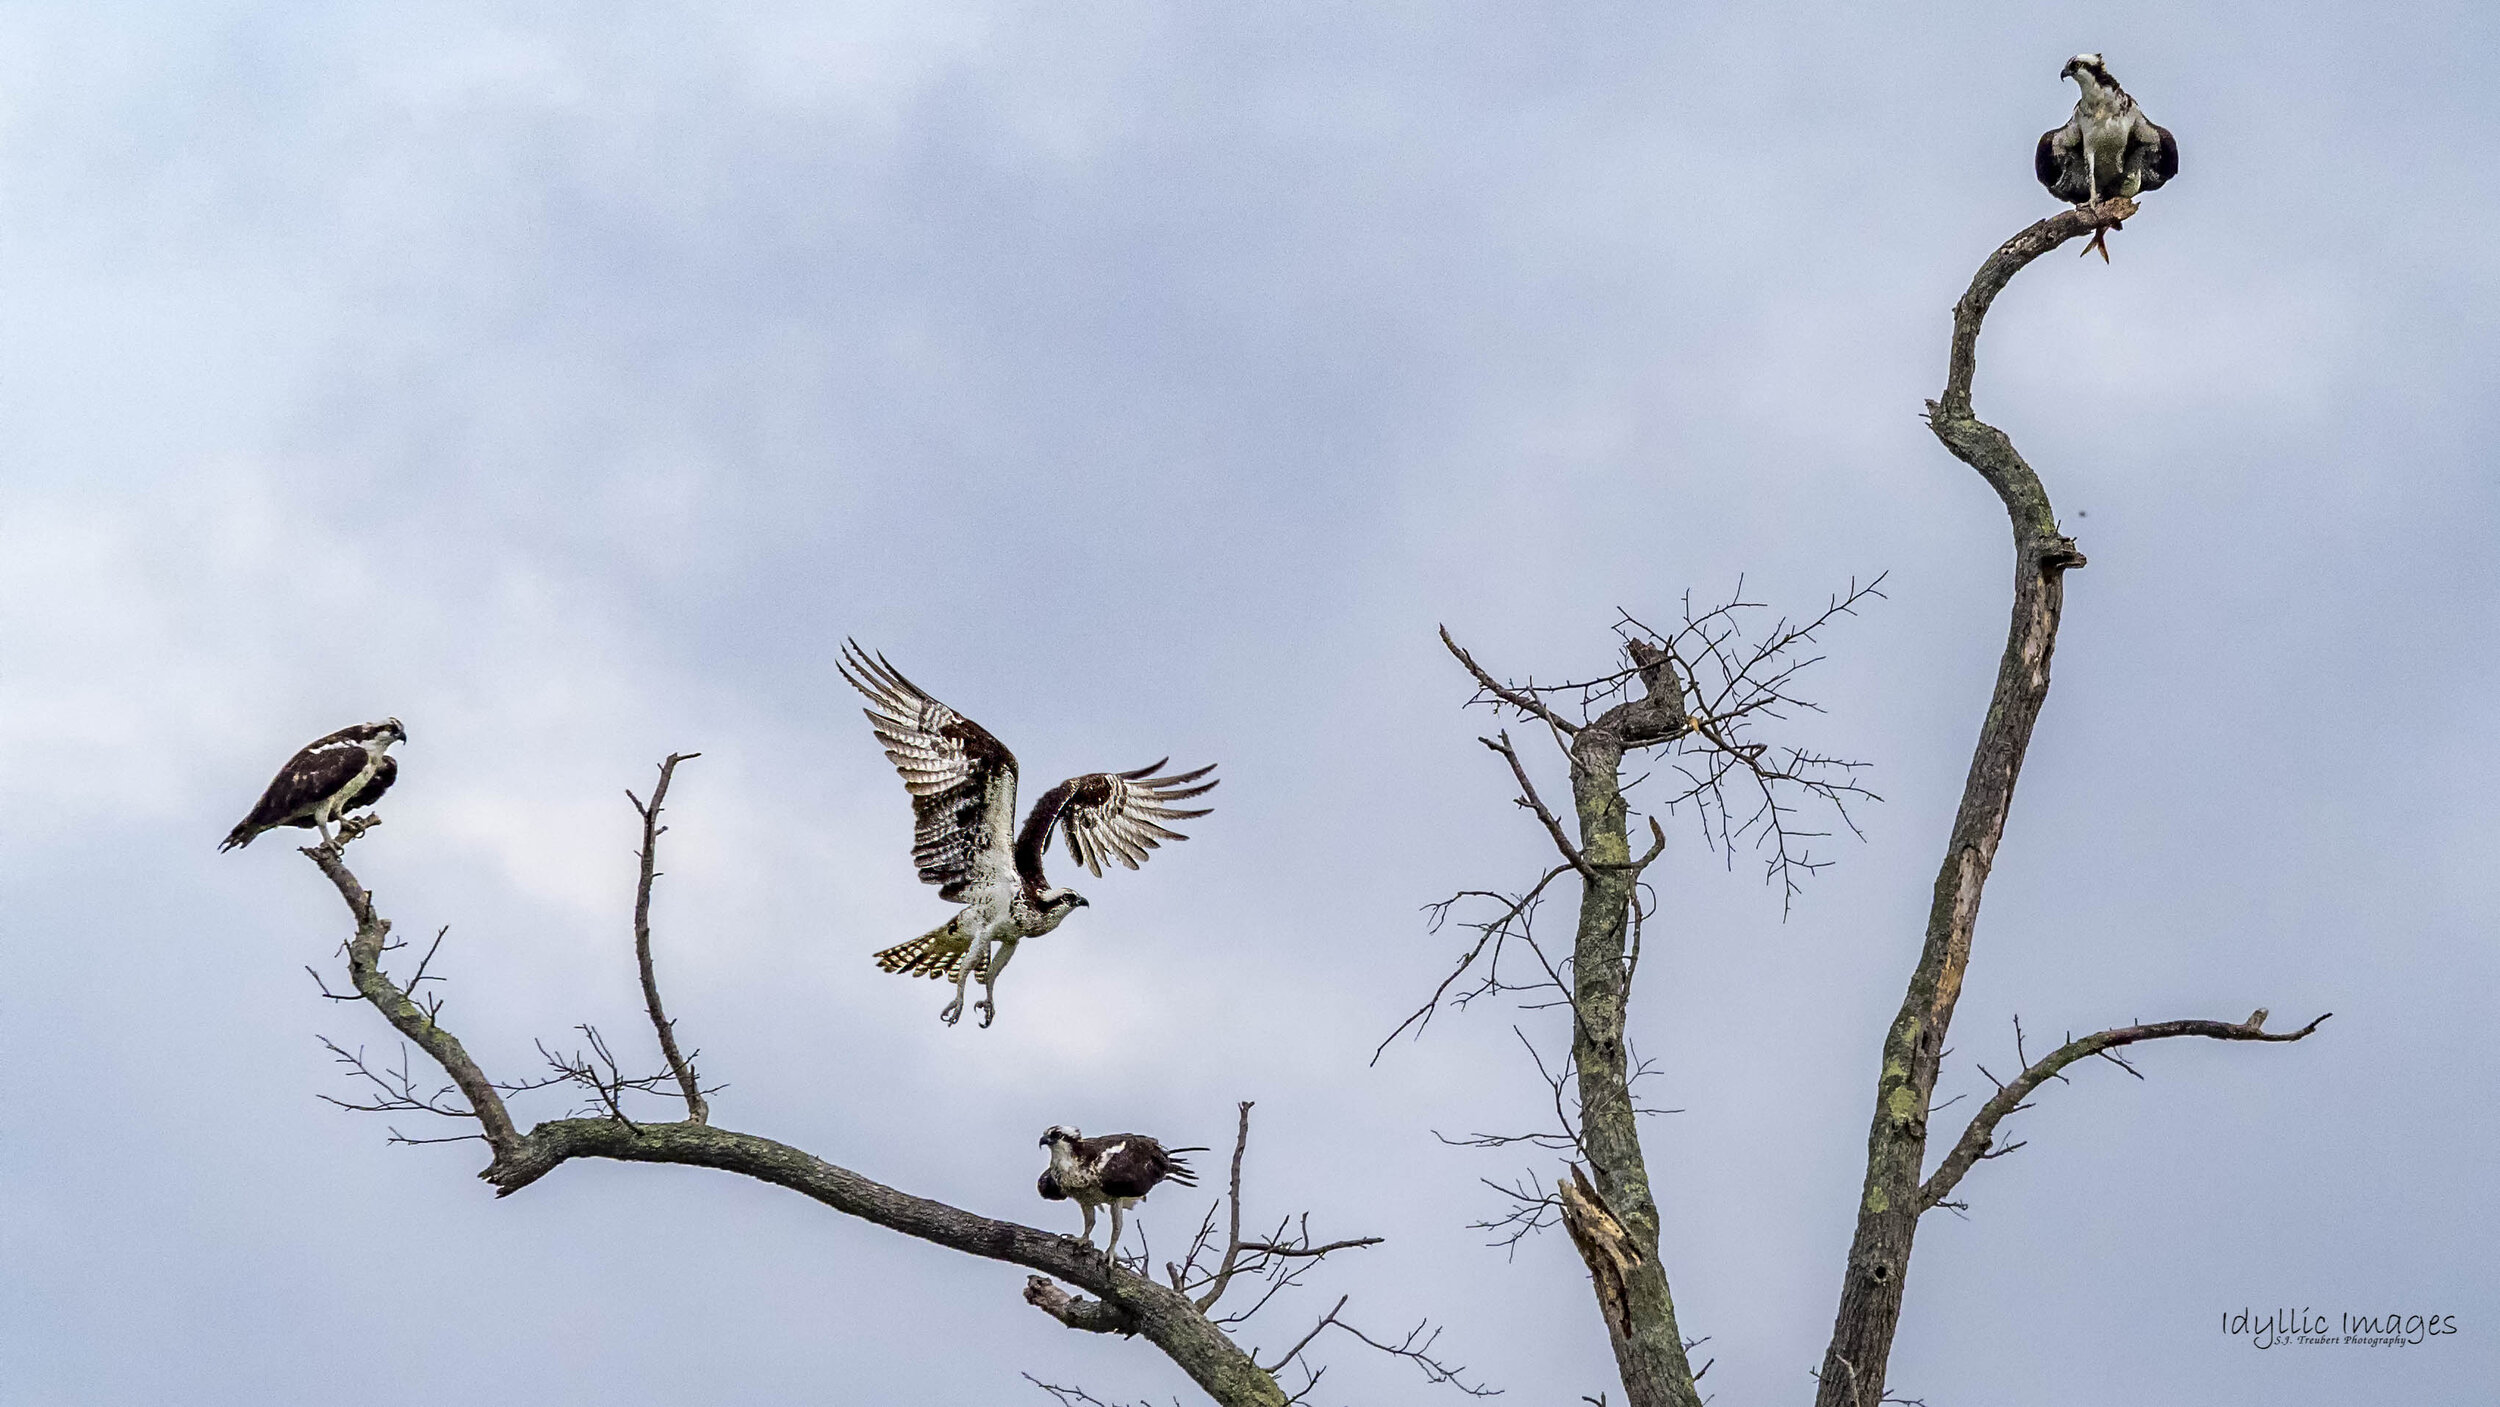 P7110348-Edit-Edit 4 ospreys in a tree.jpg